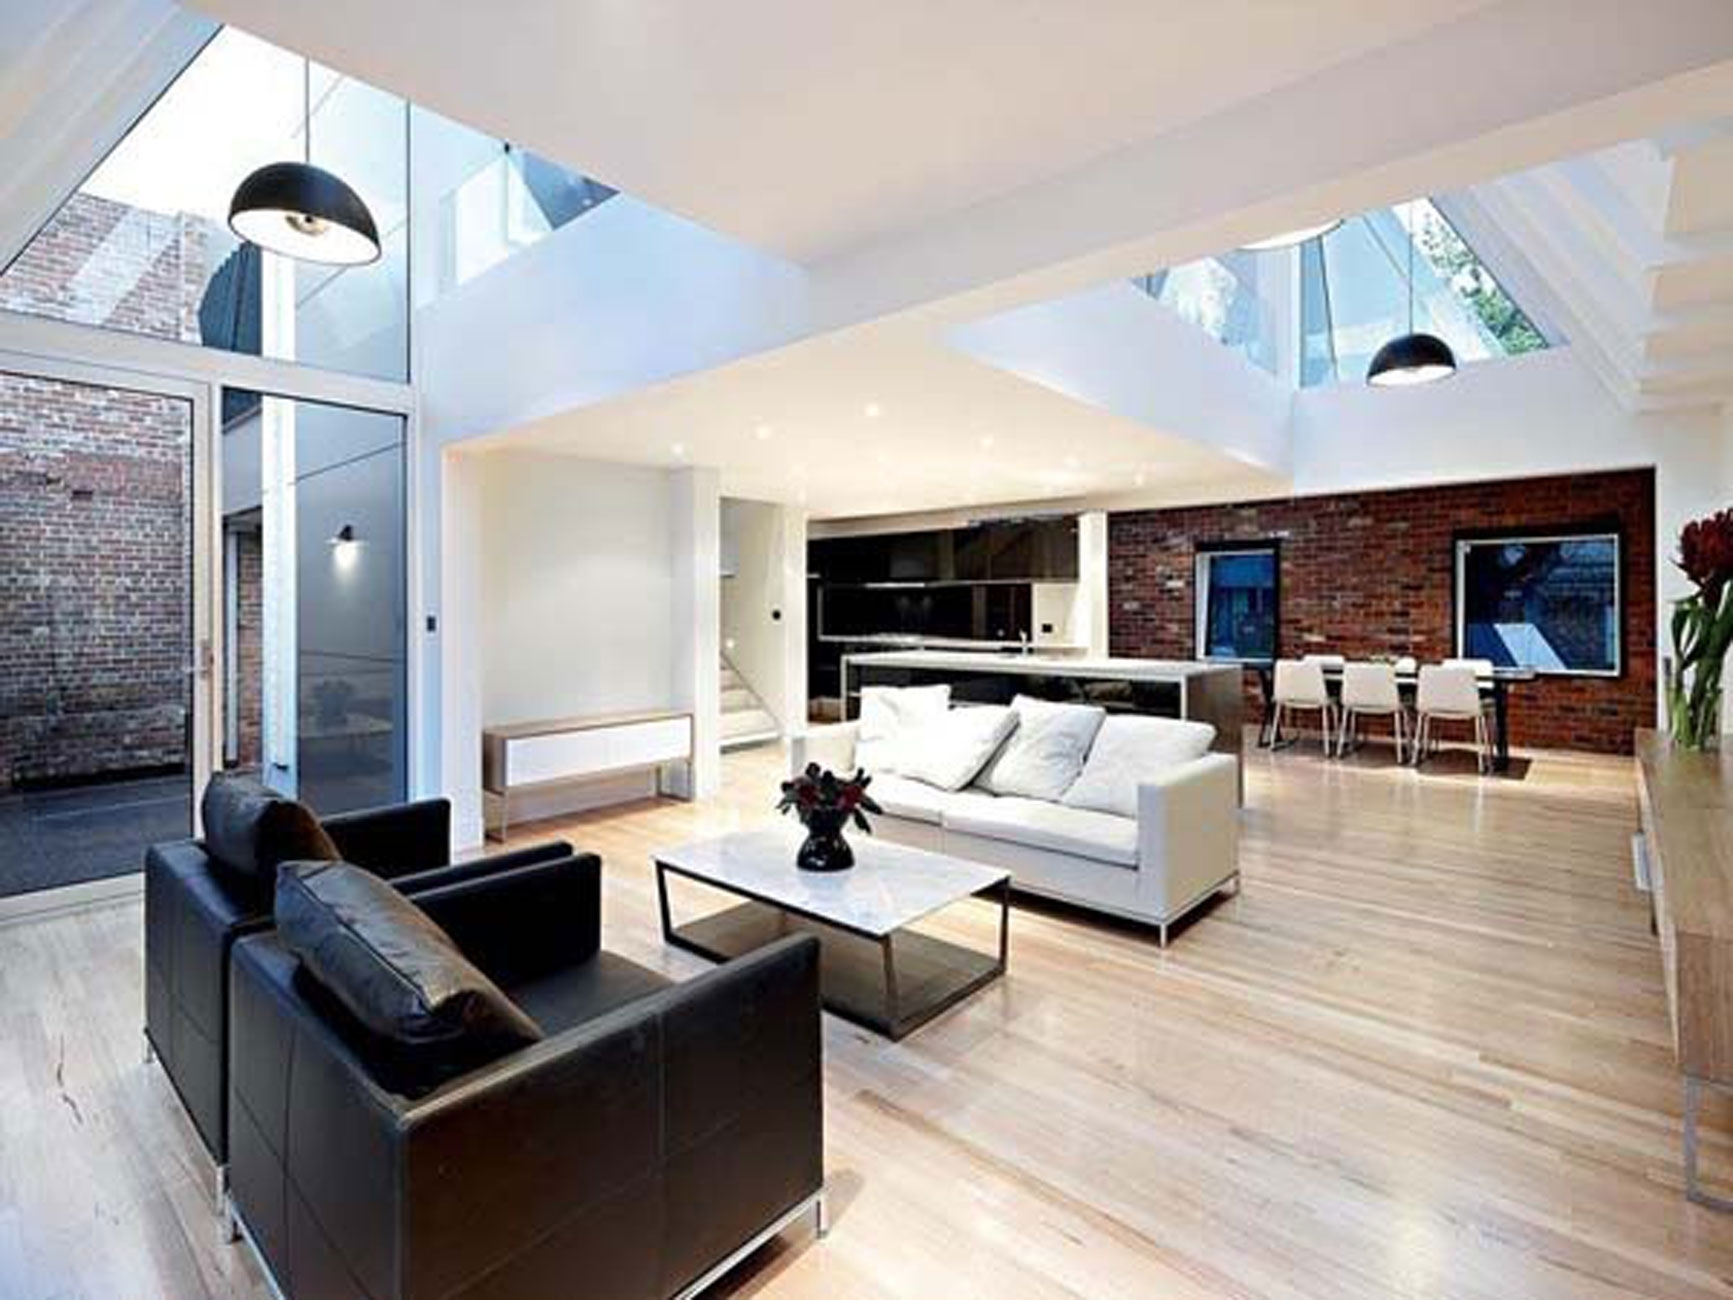 Inspiring Home Interior Design Styles